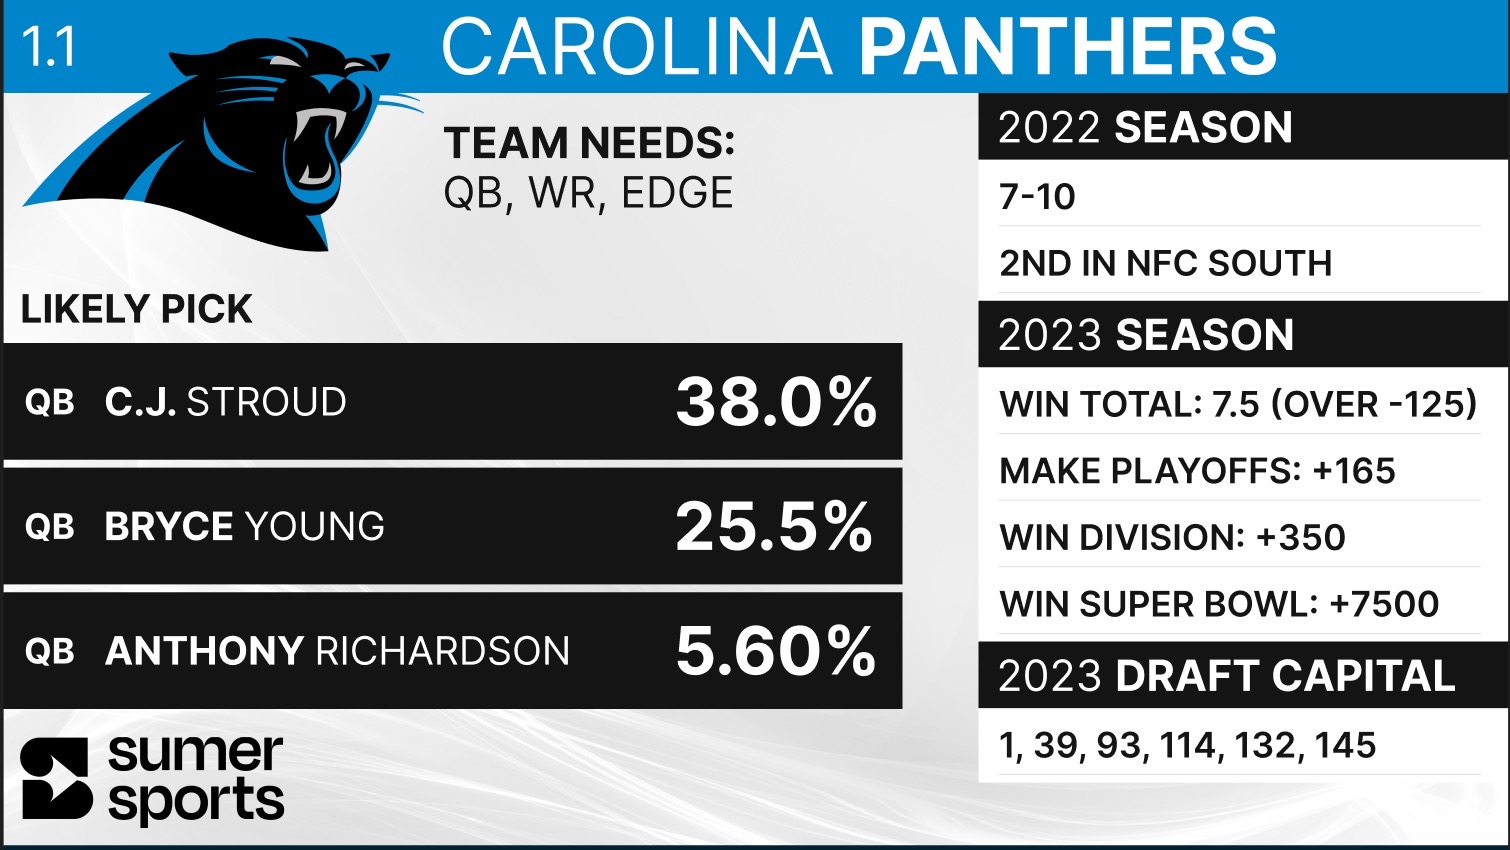 Table showing Carolina Panthers likely draft picks